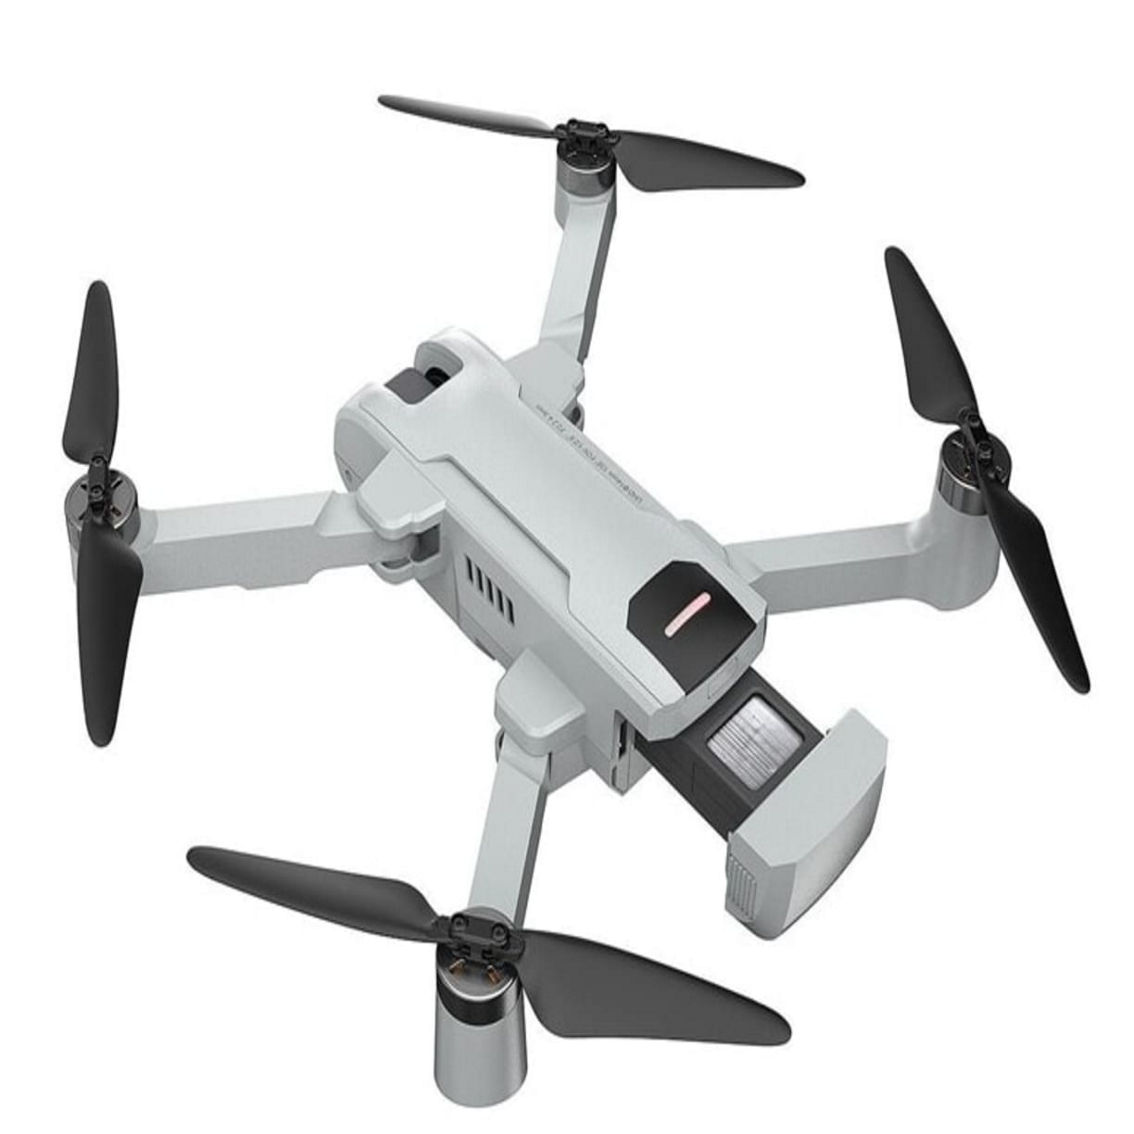 CIS-V6 medium size GPS foldable drone with 2.7k camera - Image 5 of 5